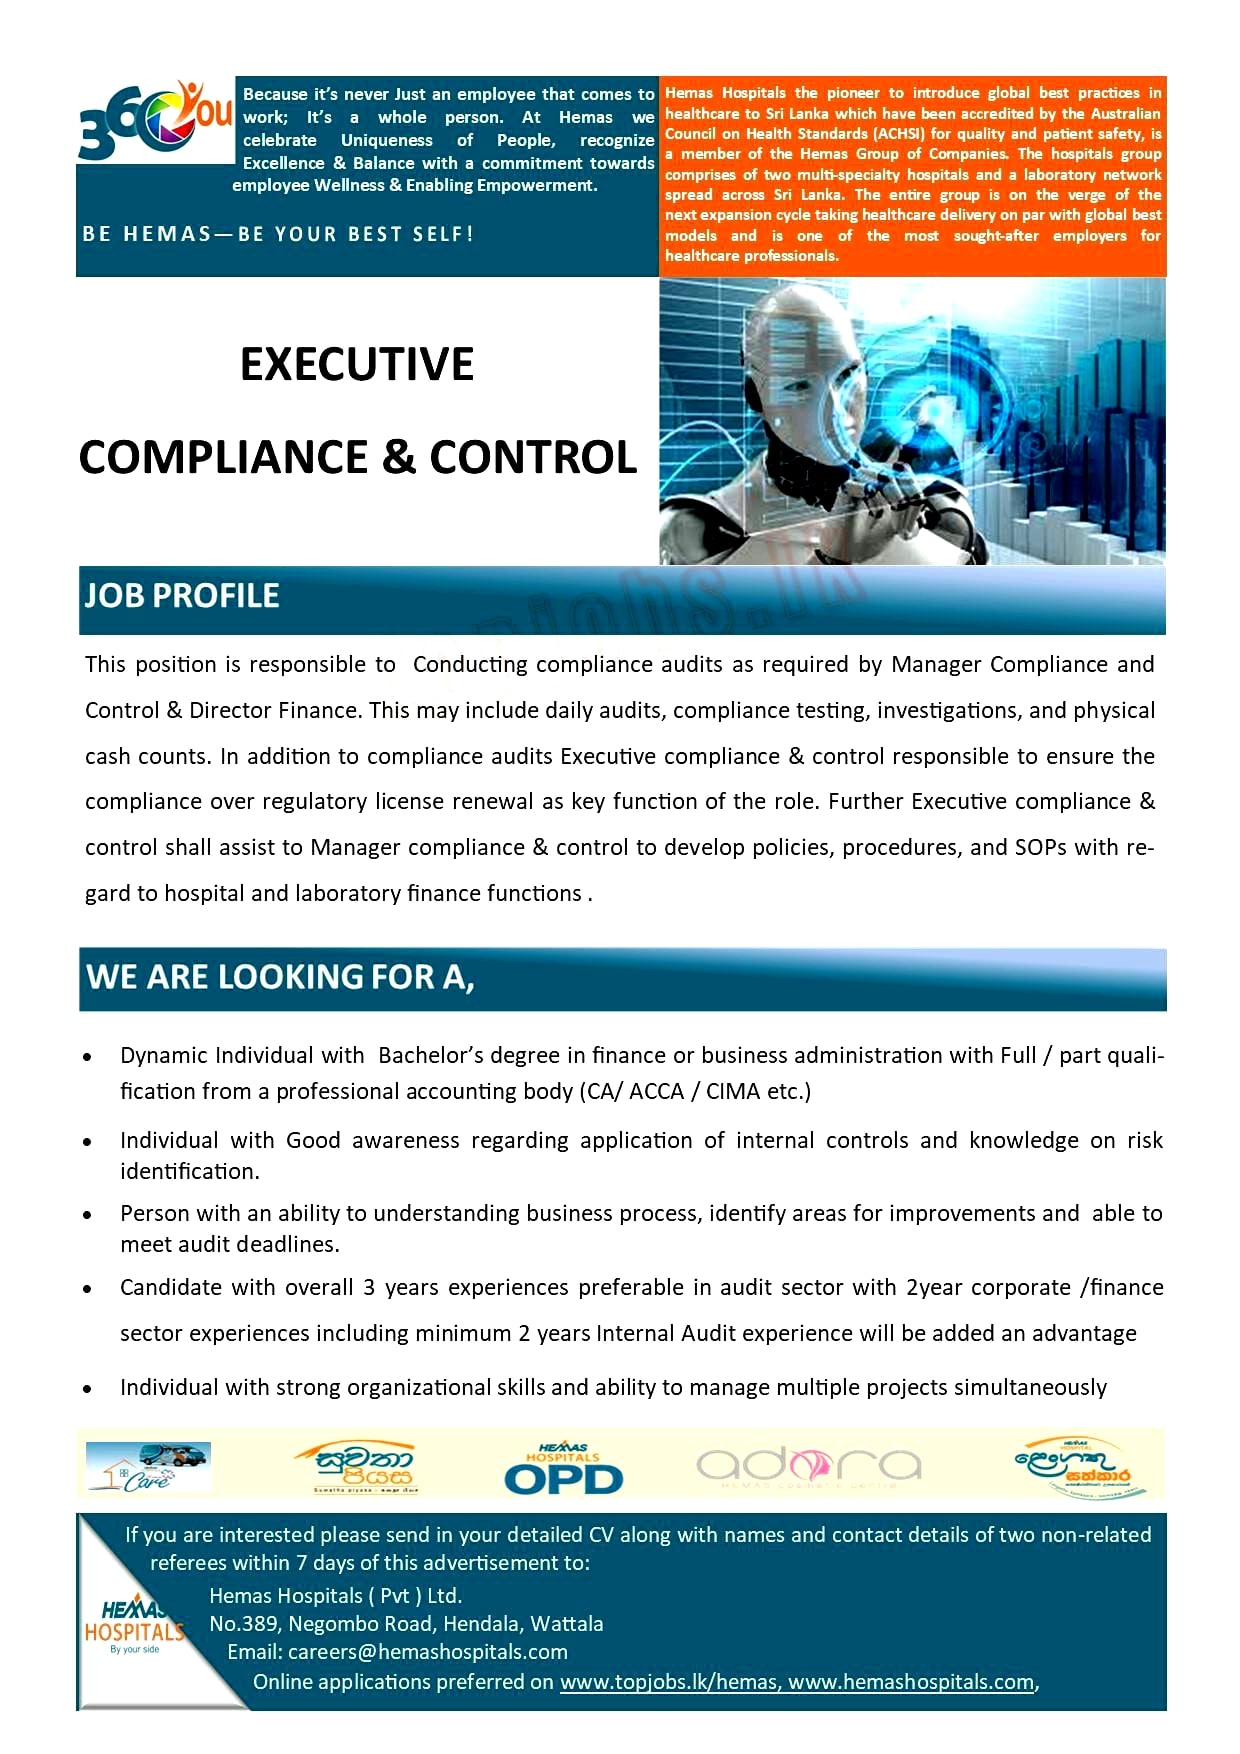 Executive Compliance & Control Job Vacancy - Hemas Holdings PLC